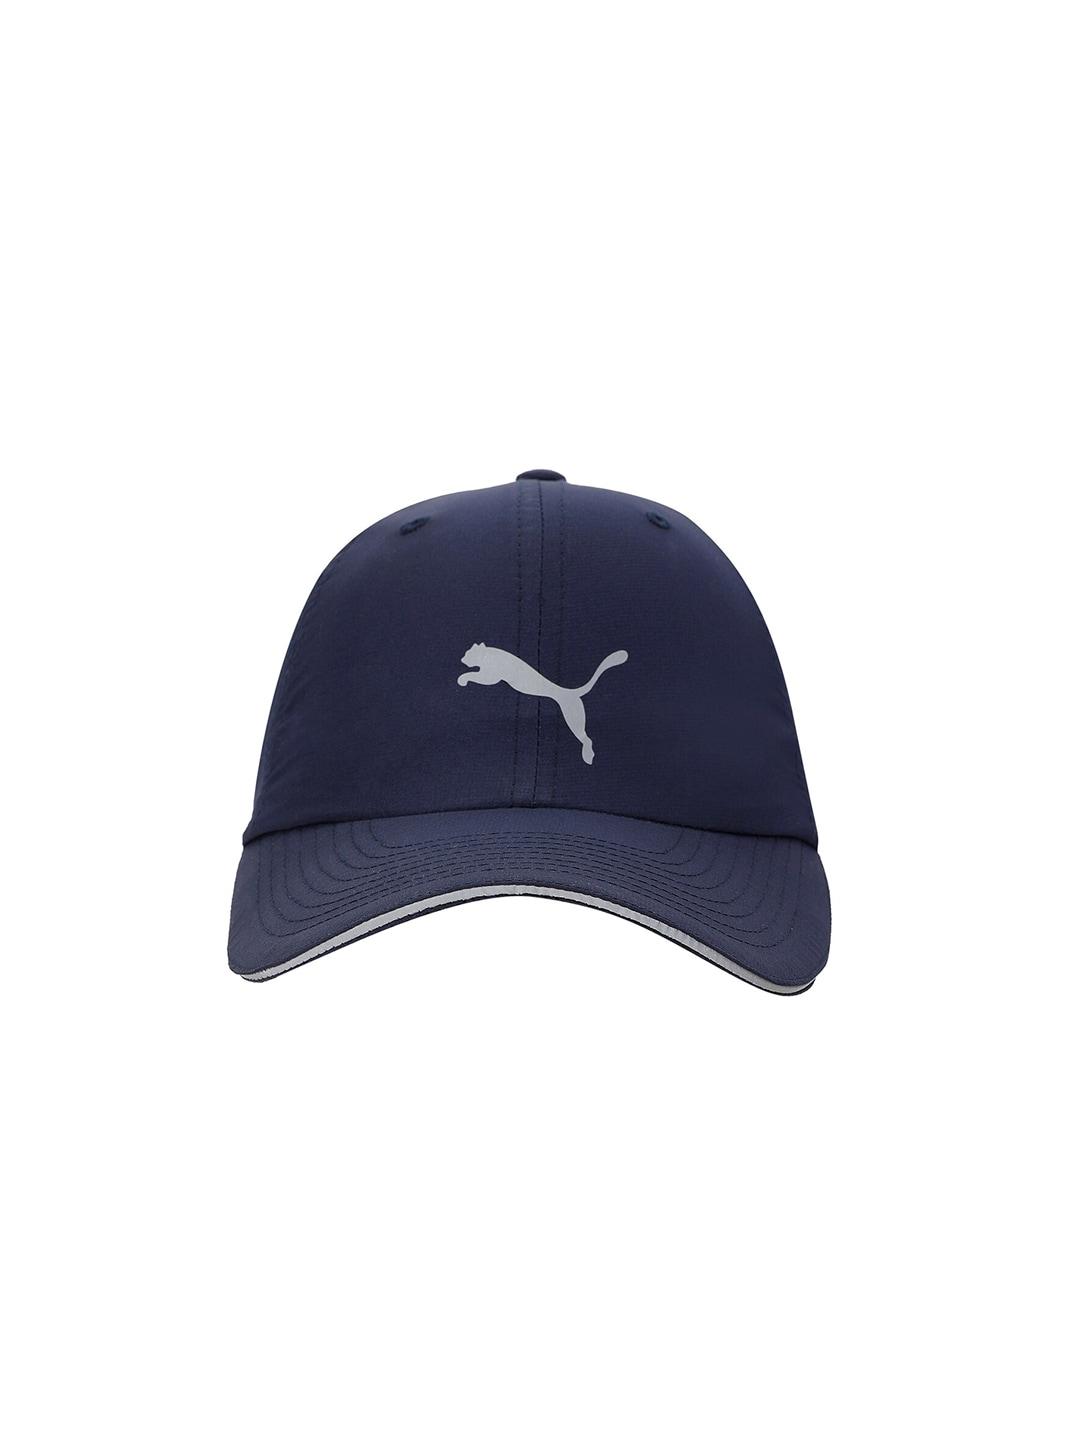 puma-unisex-blue-solid-baseball-cap